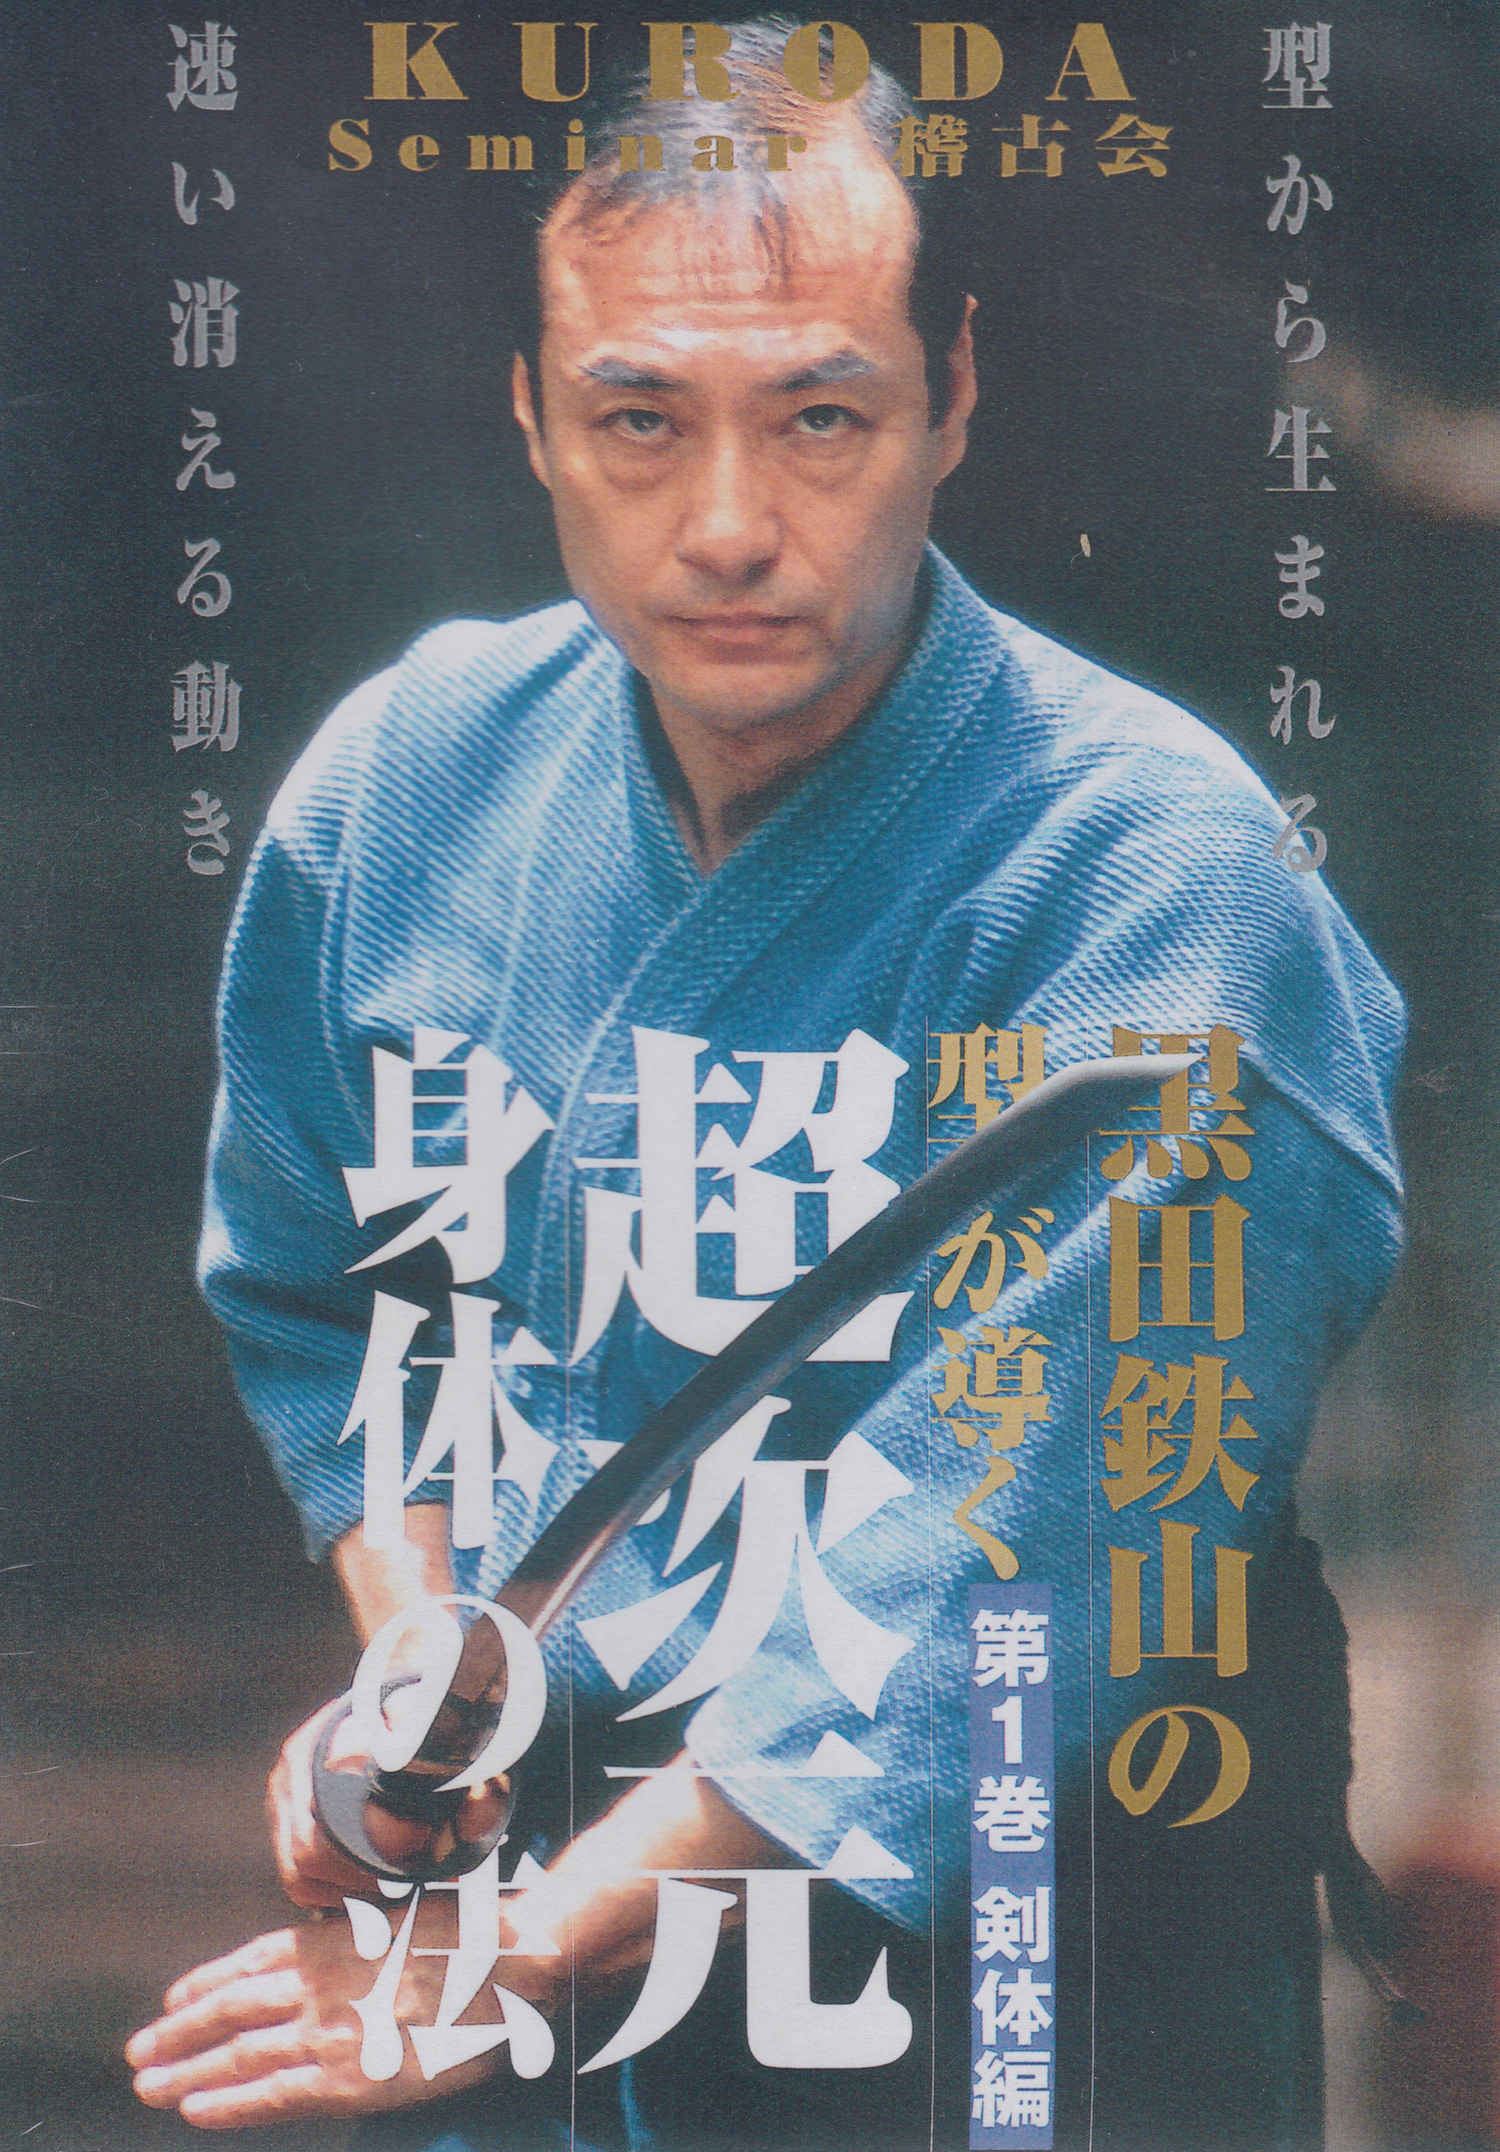 Tetsuzan Kuroda 11: Training Kata Vol 1 DVD